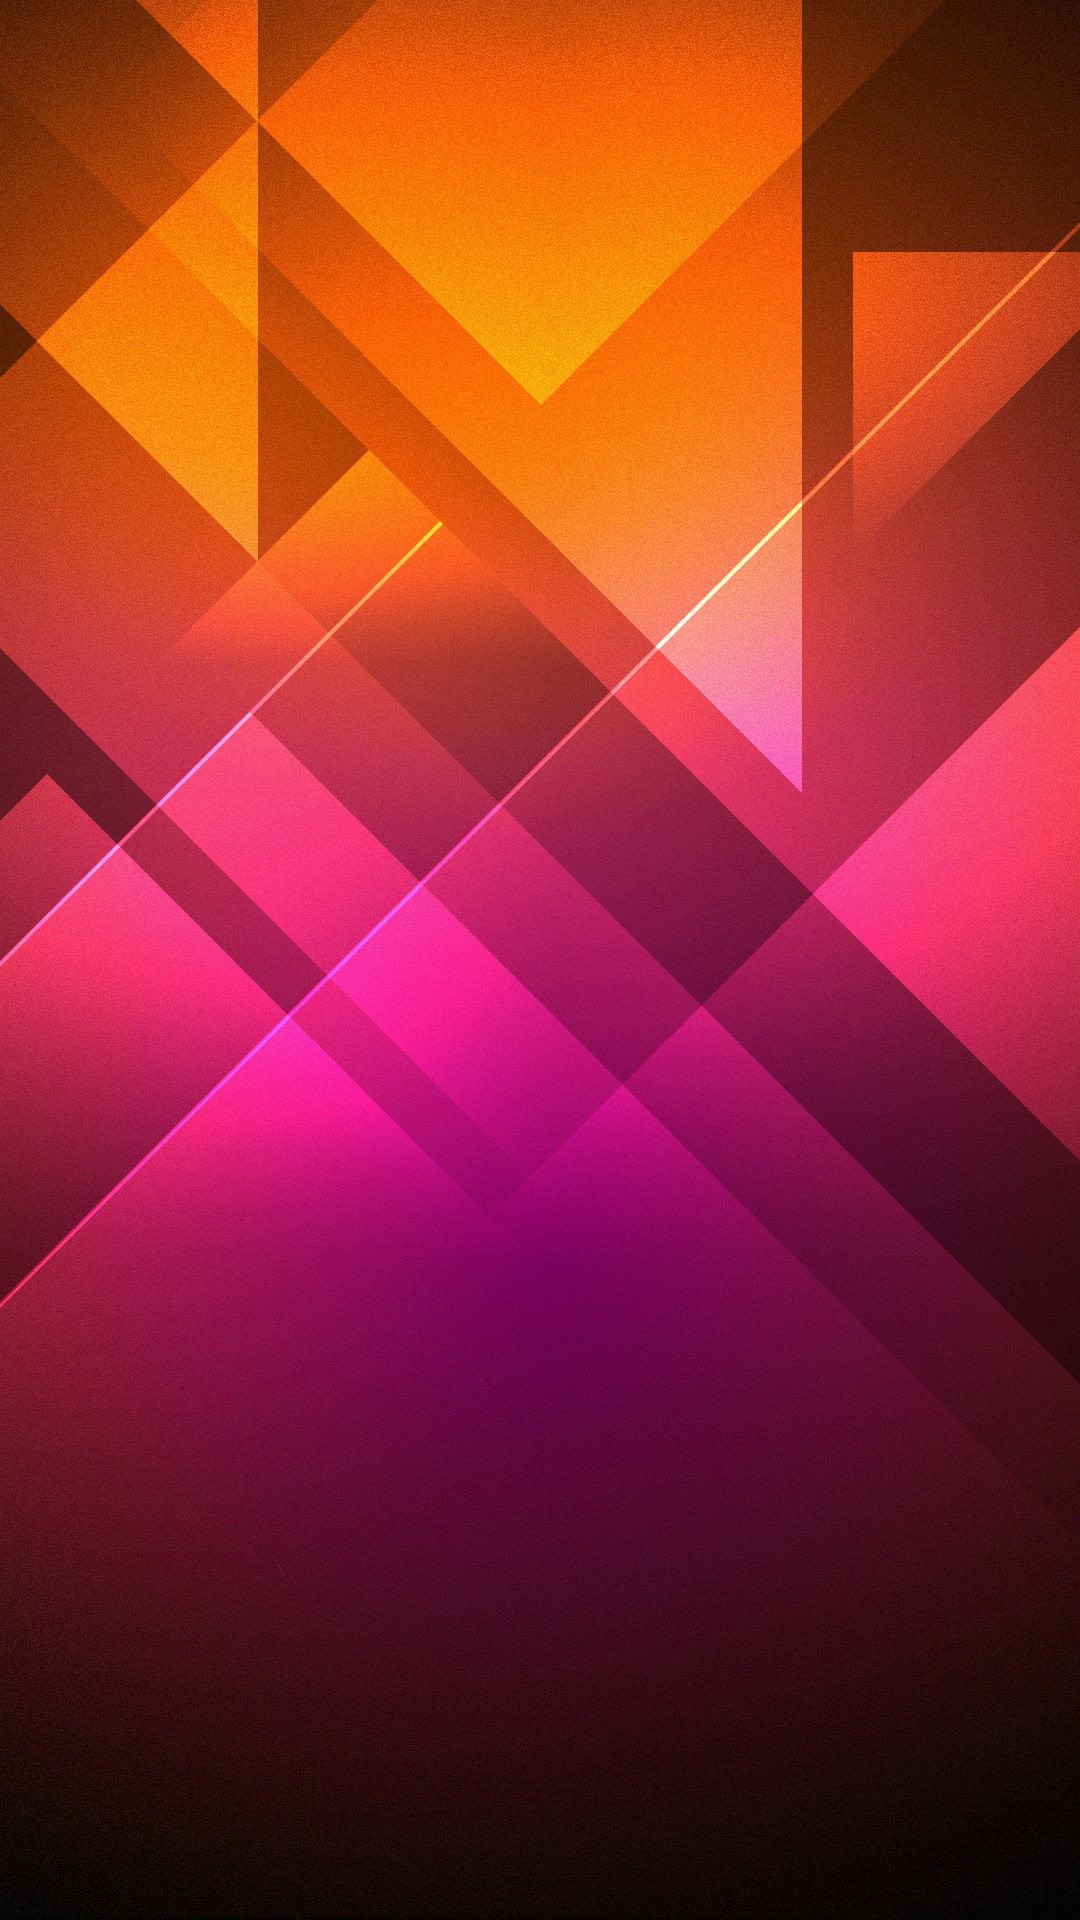 1080x1920 Wallpaper full hd 1080 x 1920 smartphone diagonal abstract